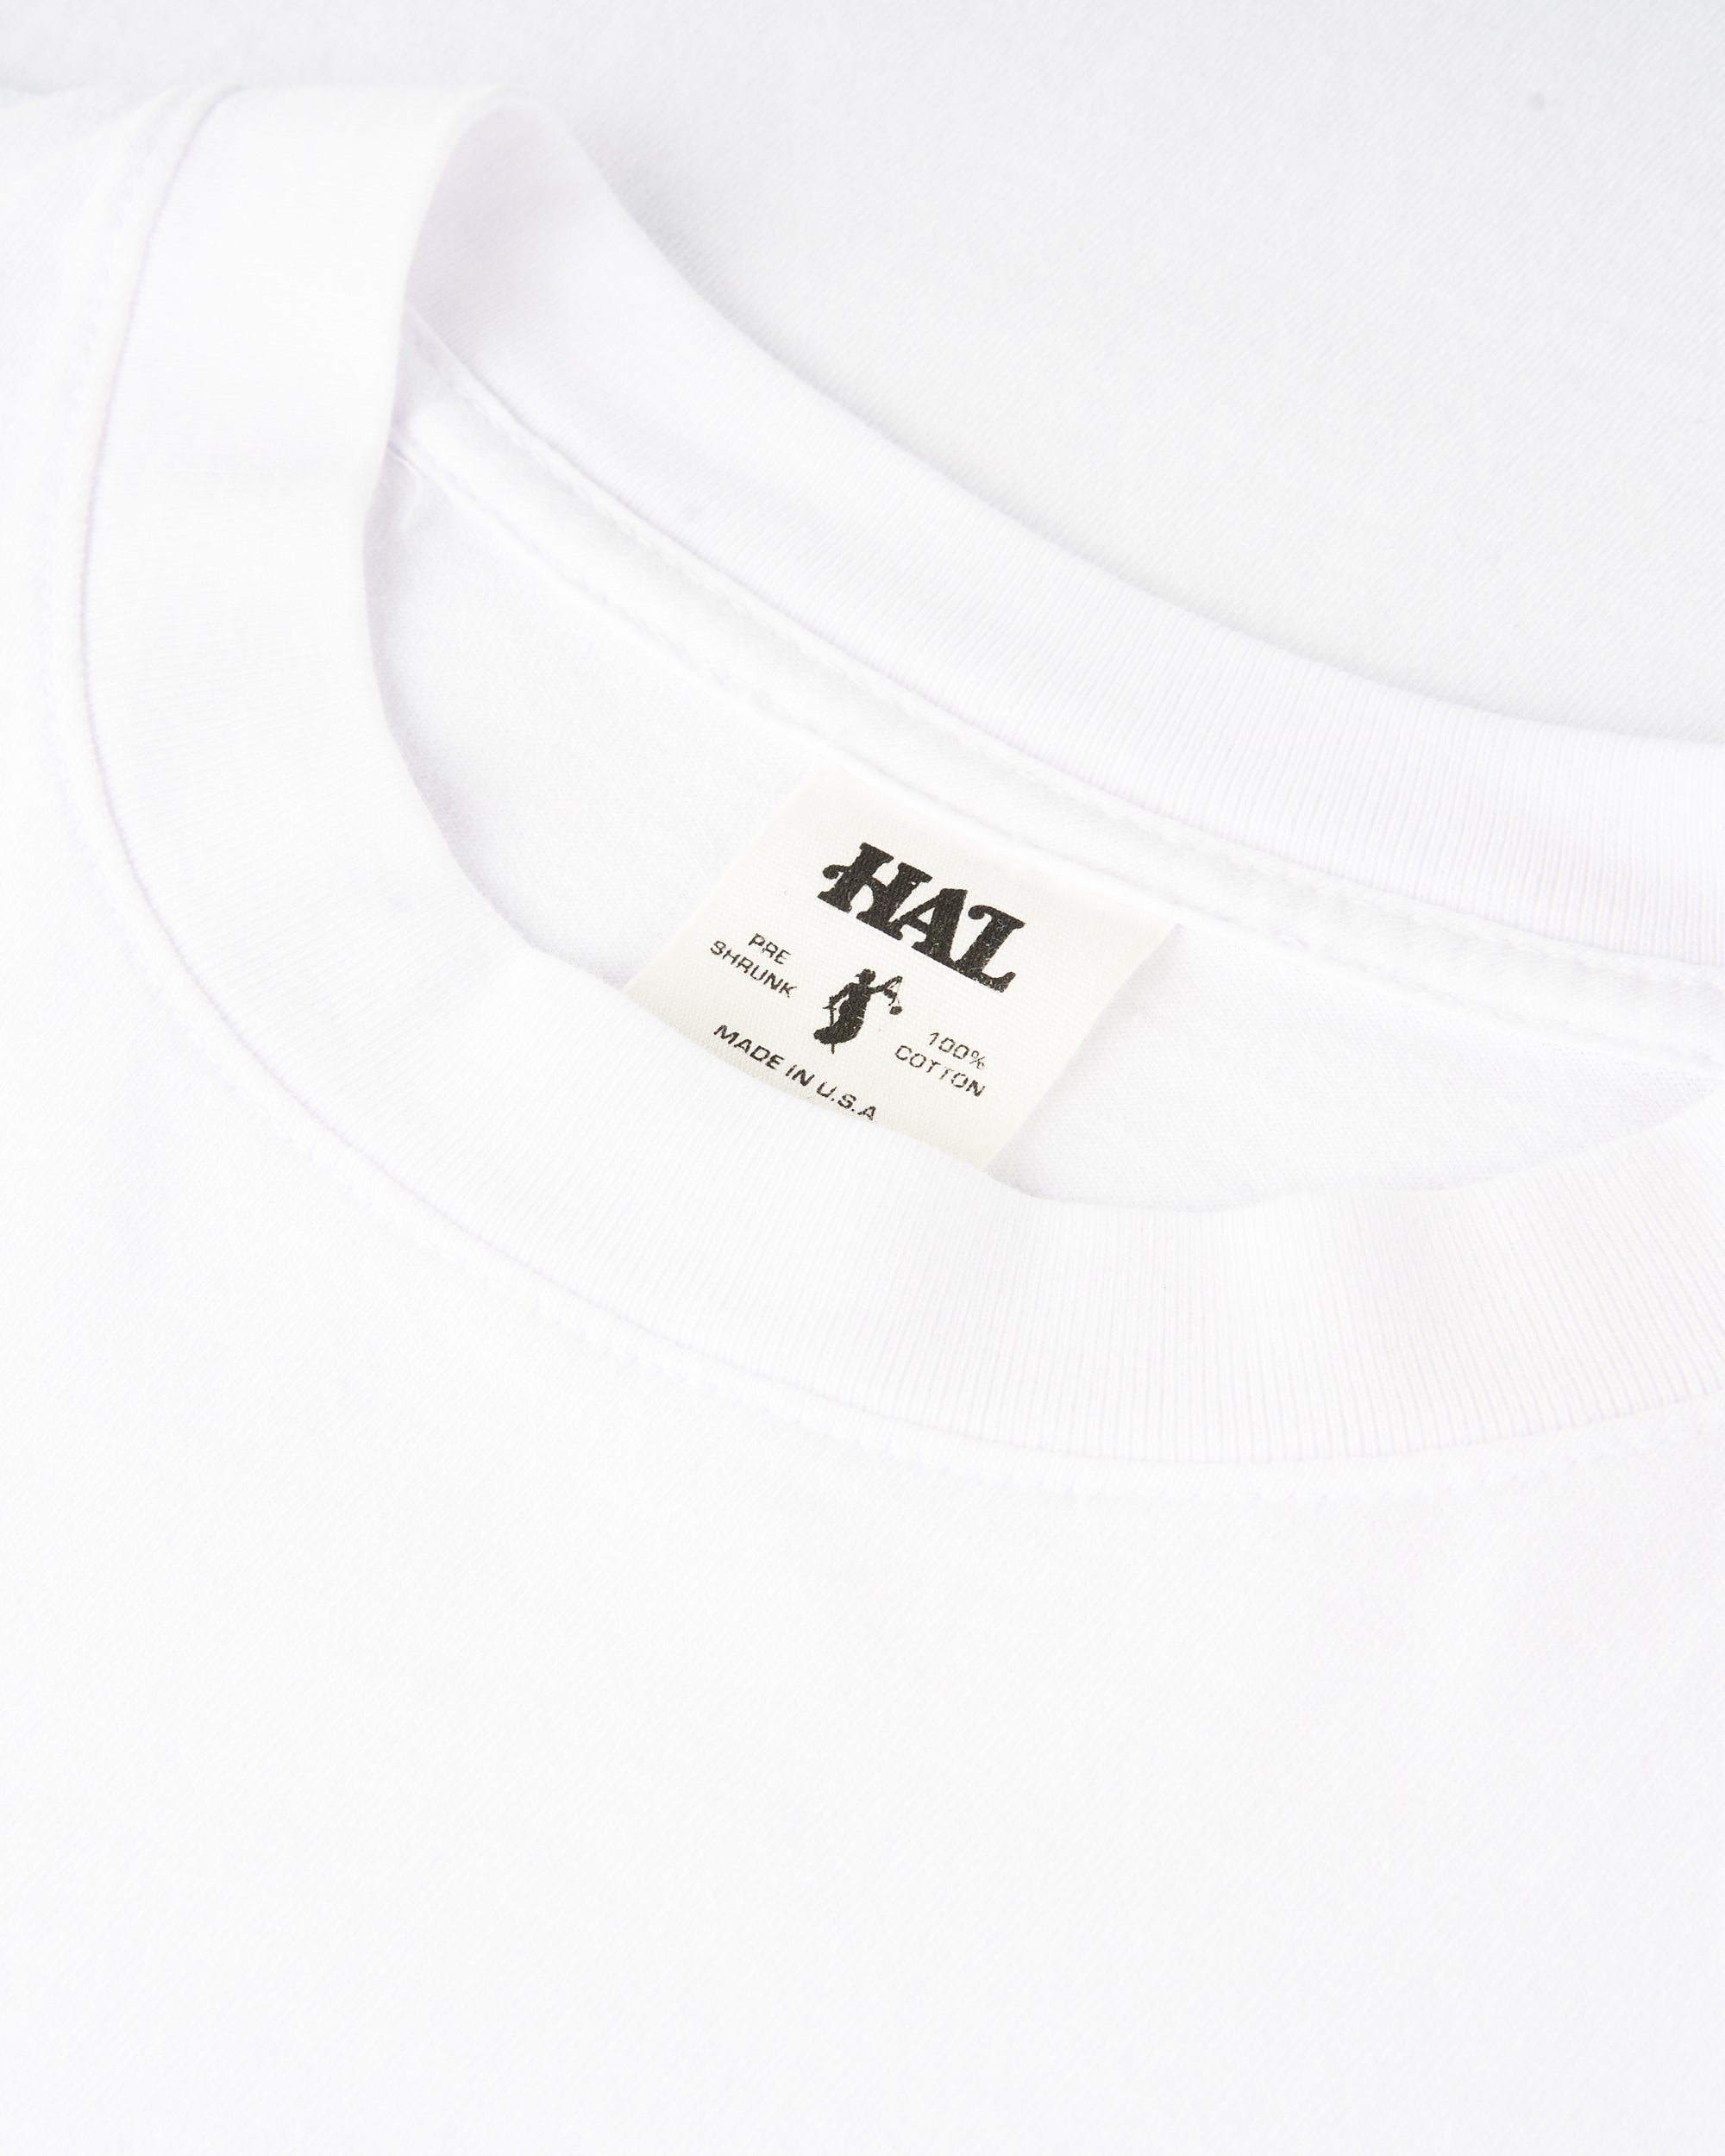 Simple T-shirt - White